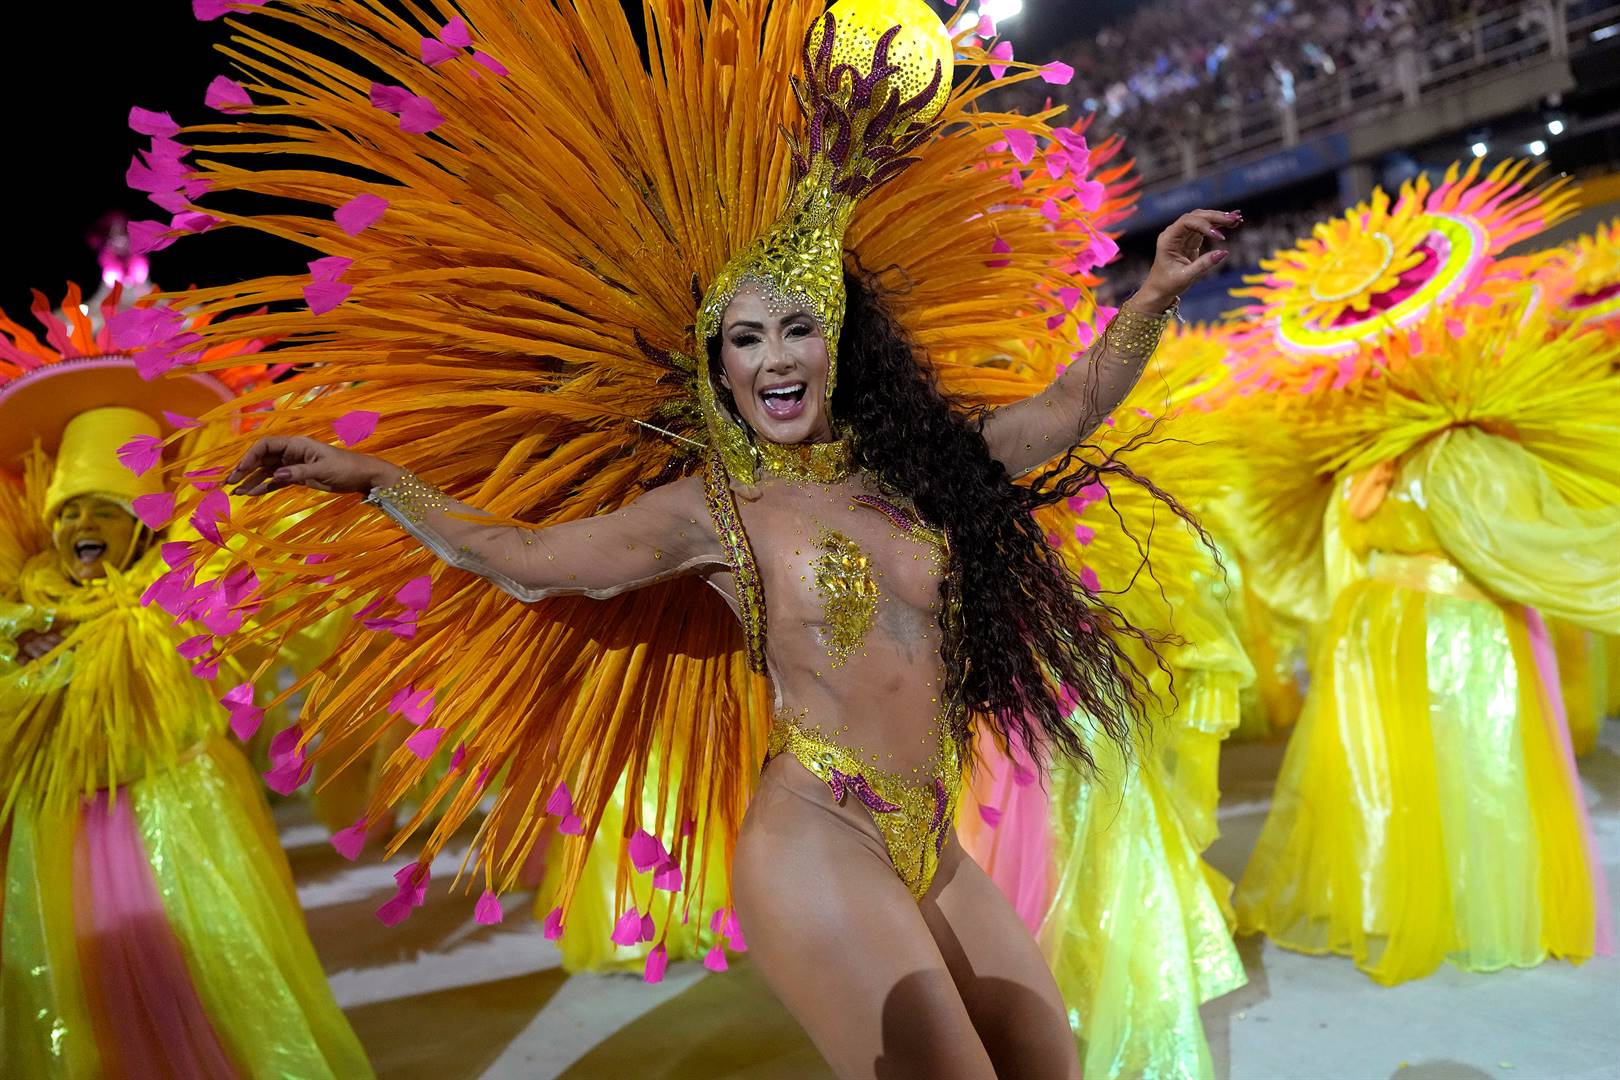 Three Woman in Brazilian Samba Carnival Costume with Colorful